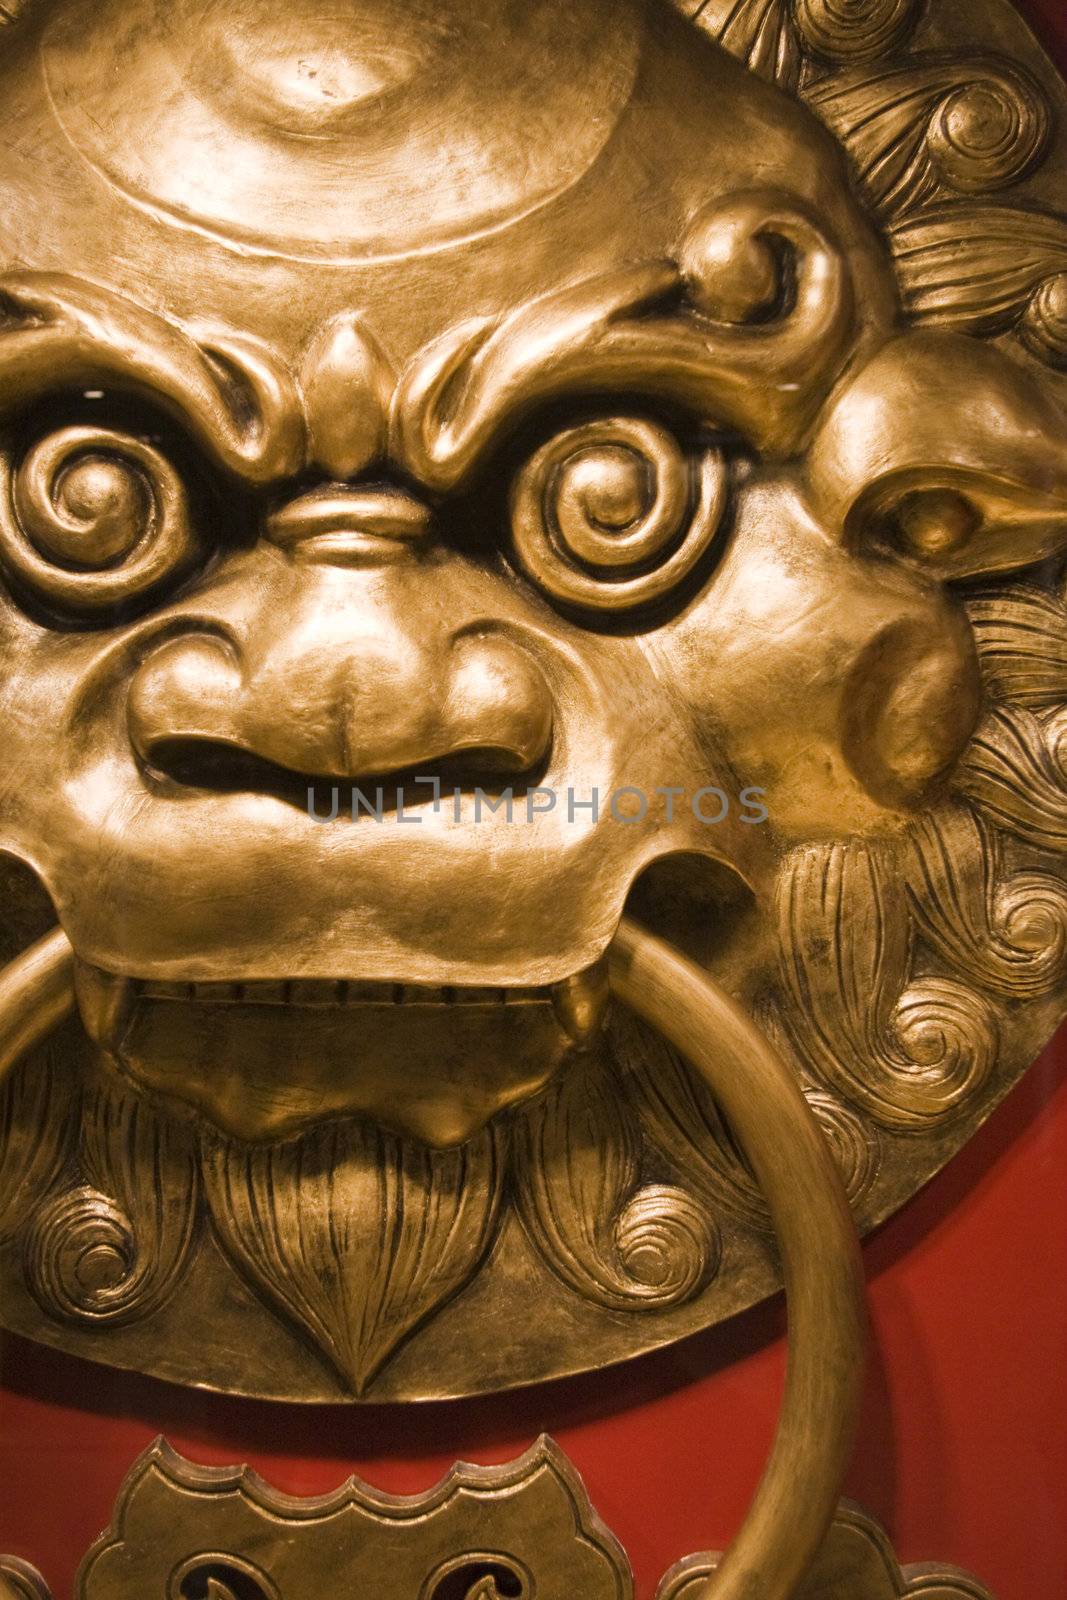 It is chinese style 
lionhead knocker door